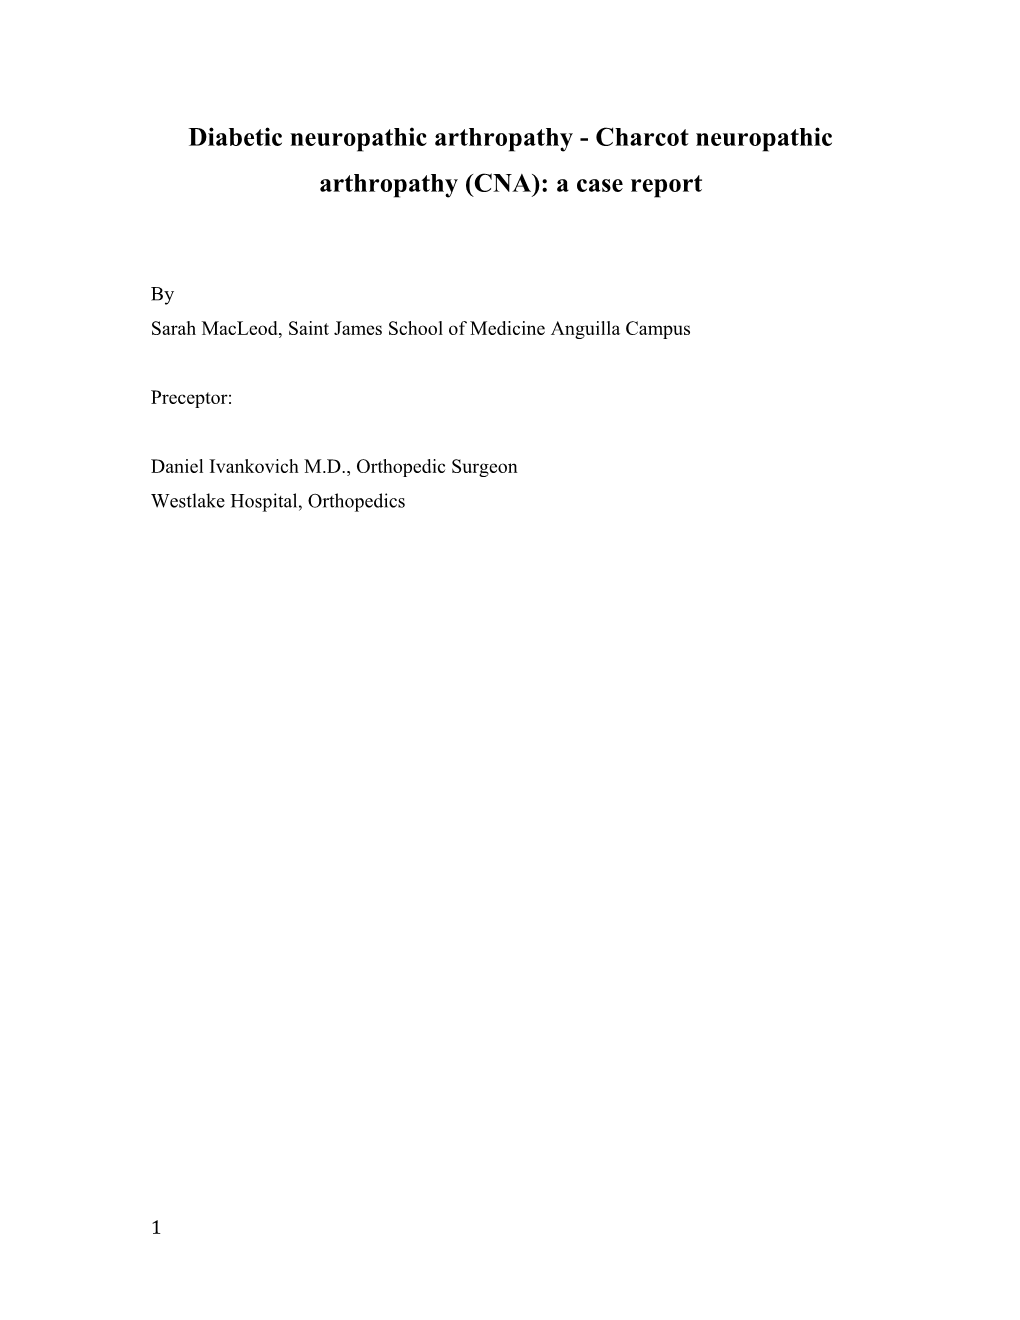 Diabetic Neuropathic Arthropathy - Charcot Neuropathic Arthropathy (CNA): a Case Report